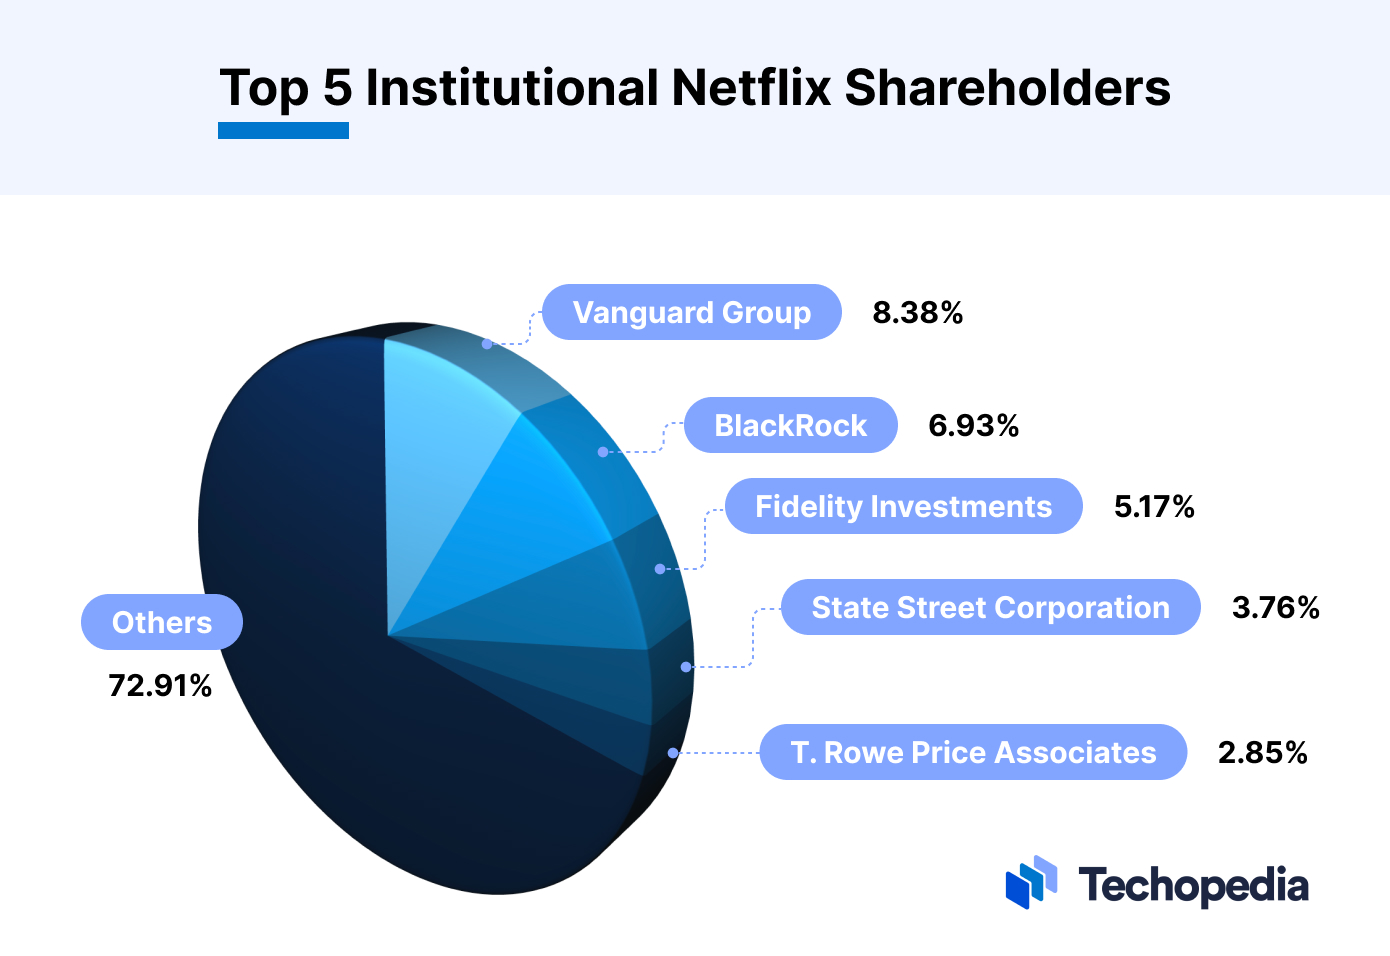 Top 5 Institutional Netflix Shareholders